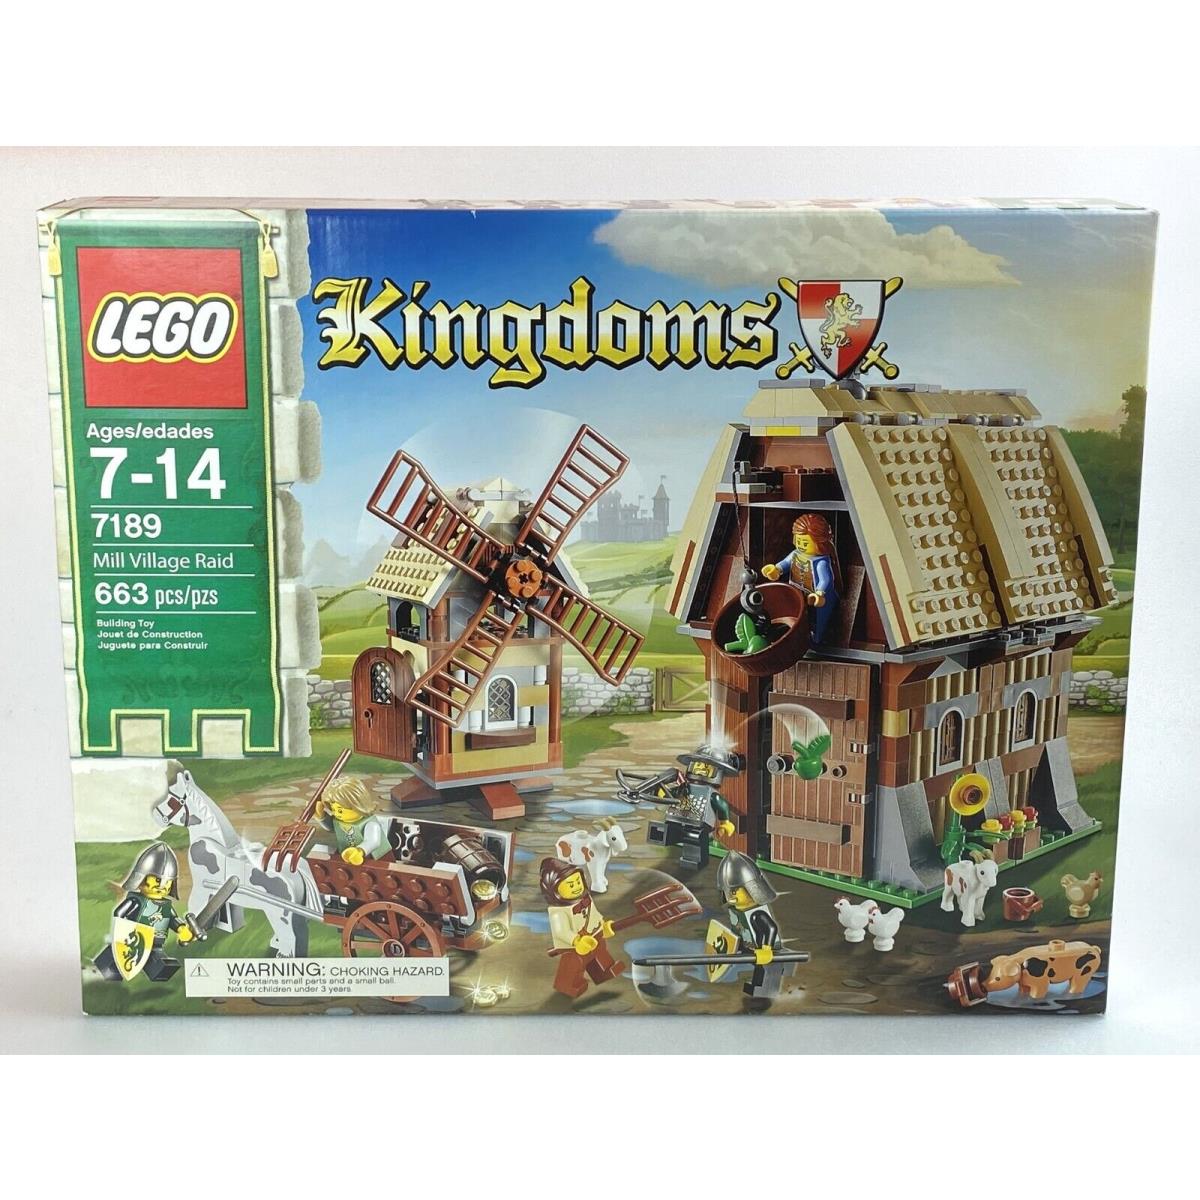 Mill Village Raid 7189 Lego Kingdoms Set 2011 Retired Vintage